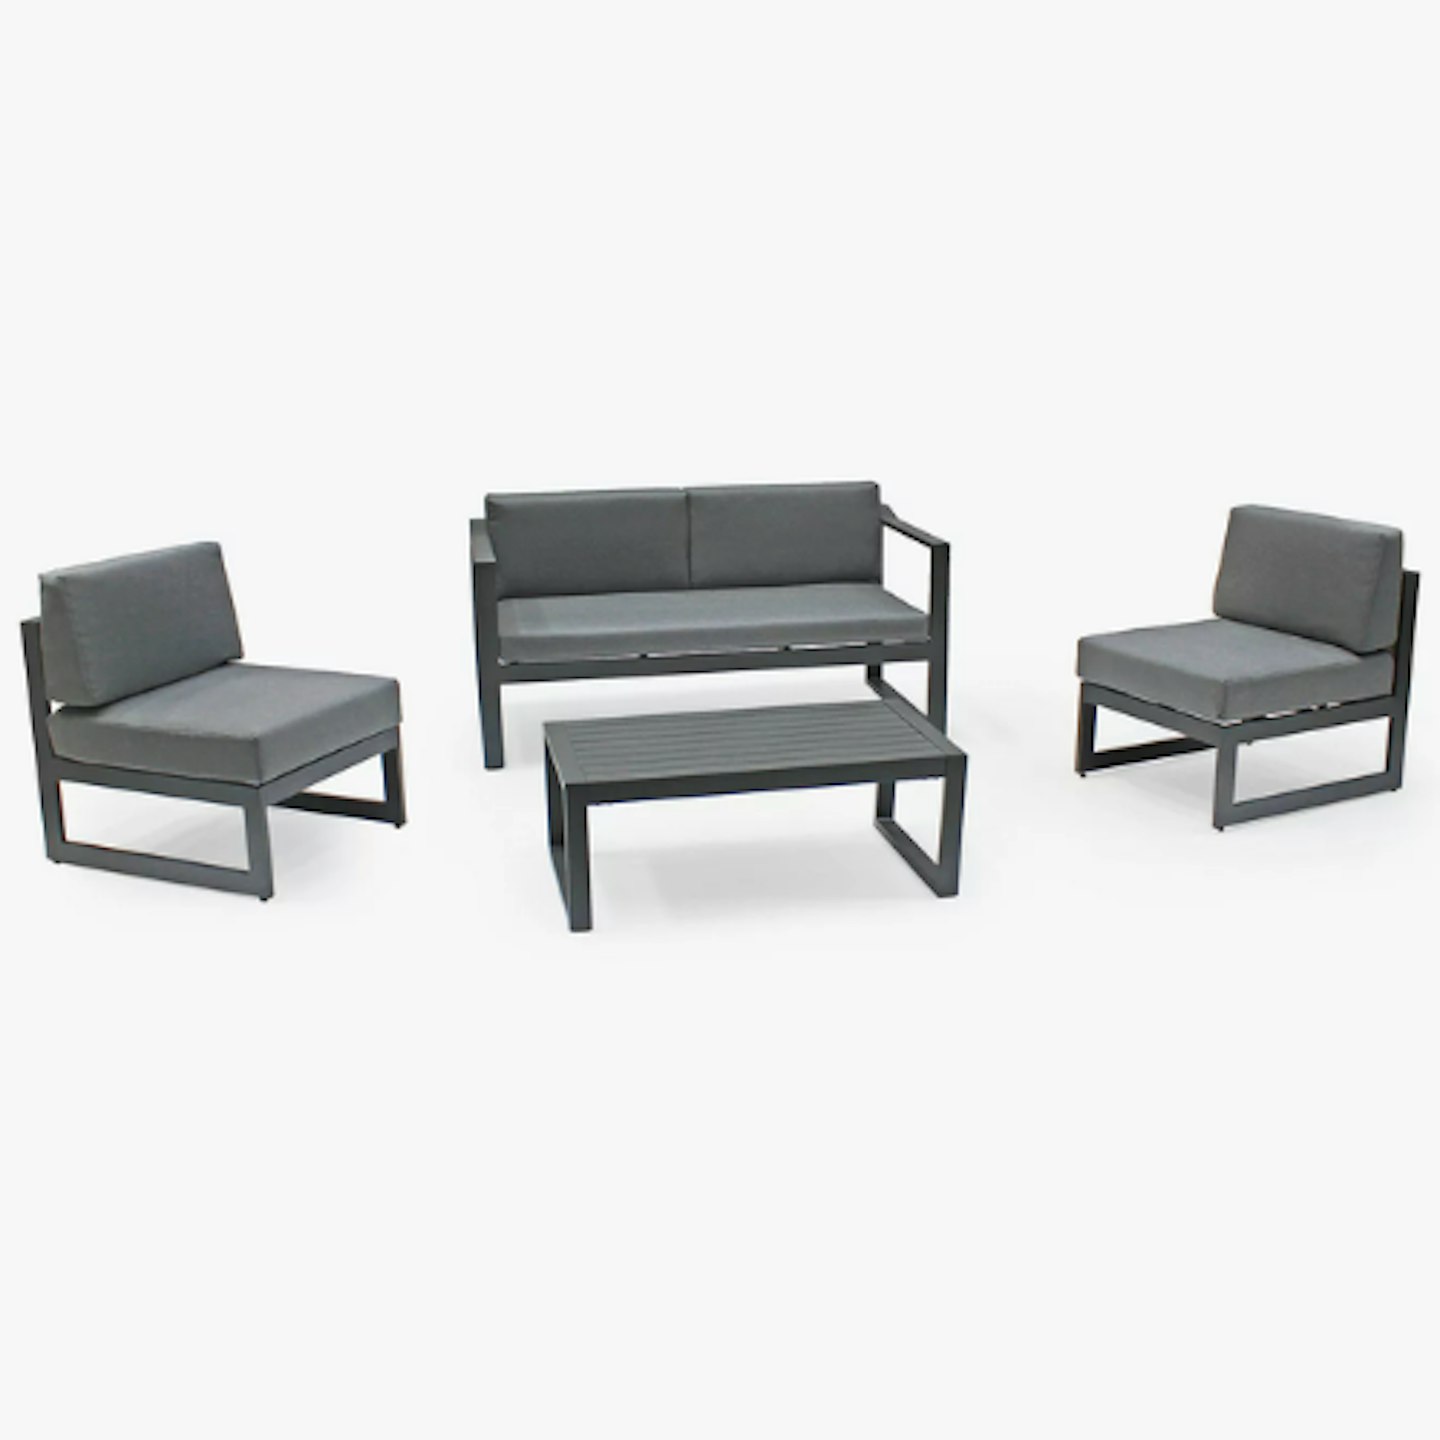 KETTLER Versa 4-Seat Garden Lounging Table & Chairs Set